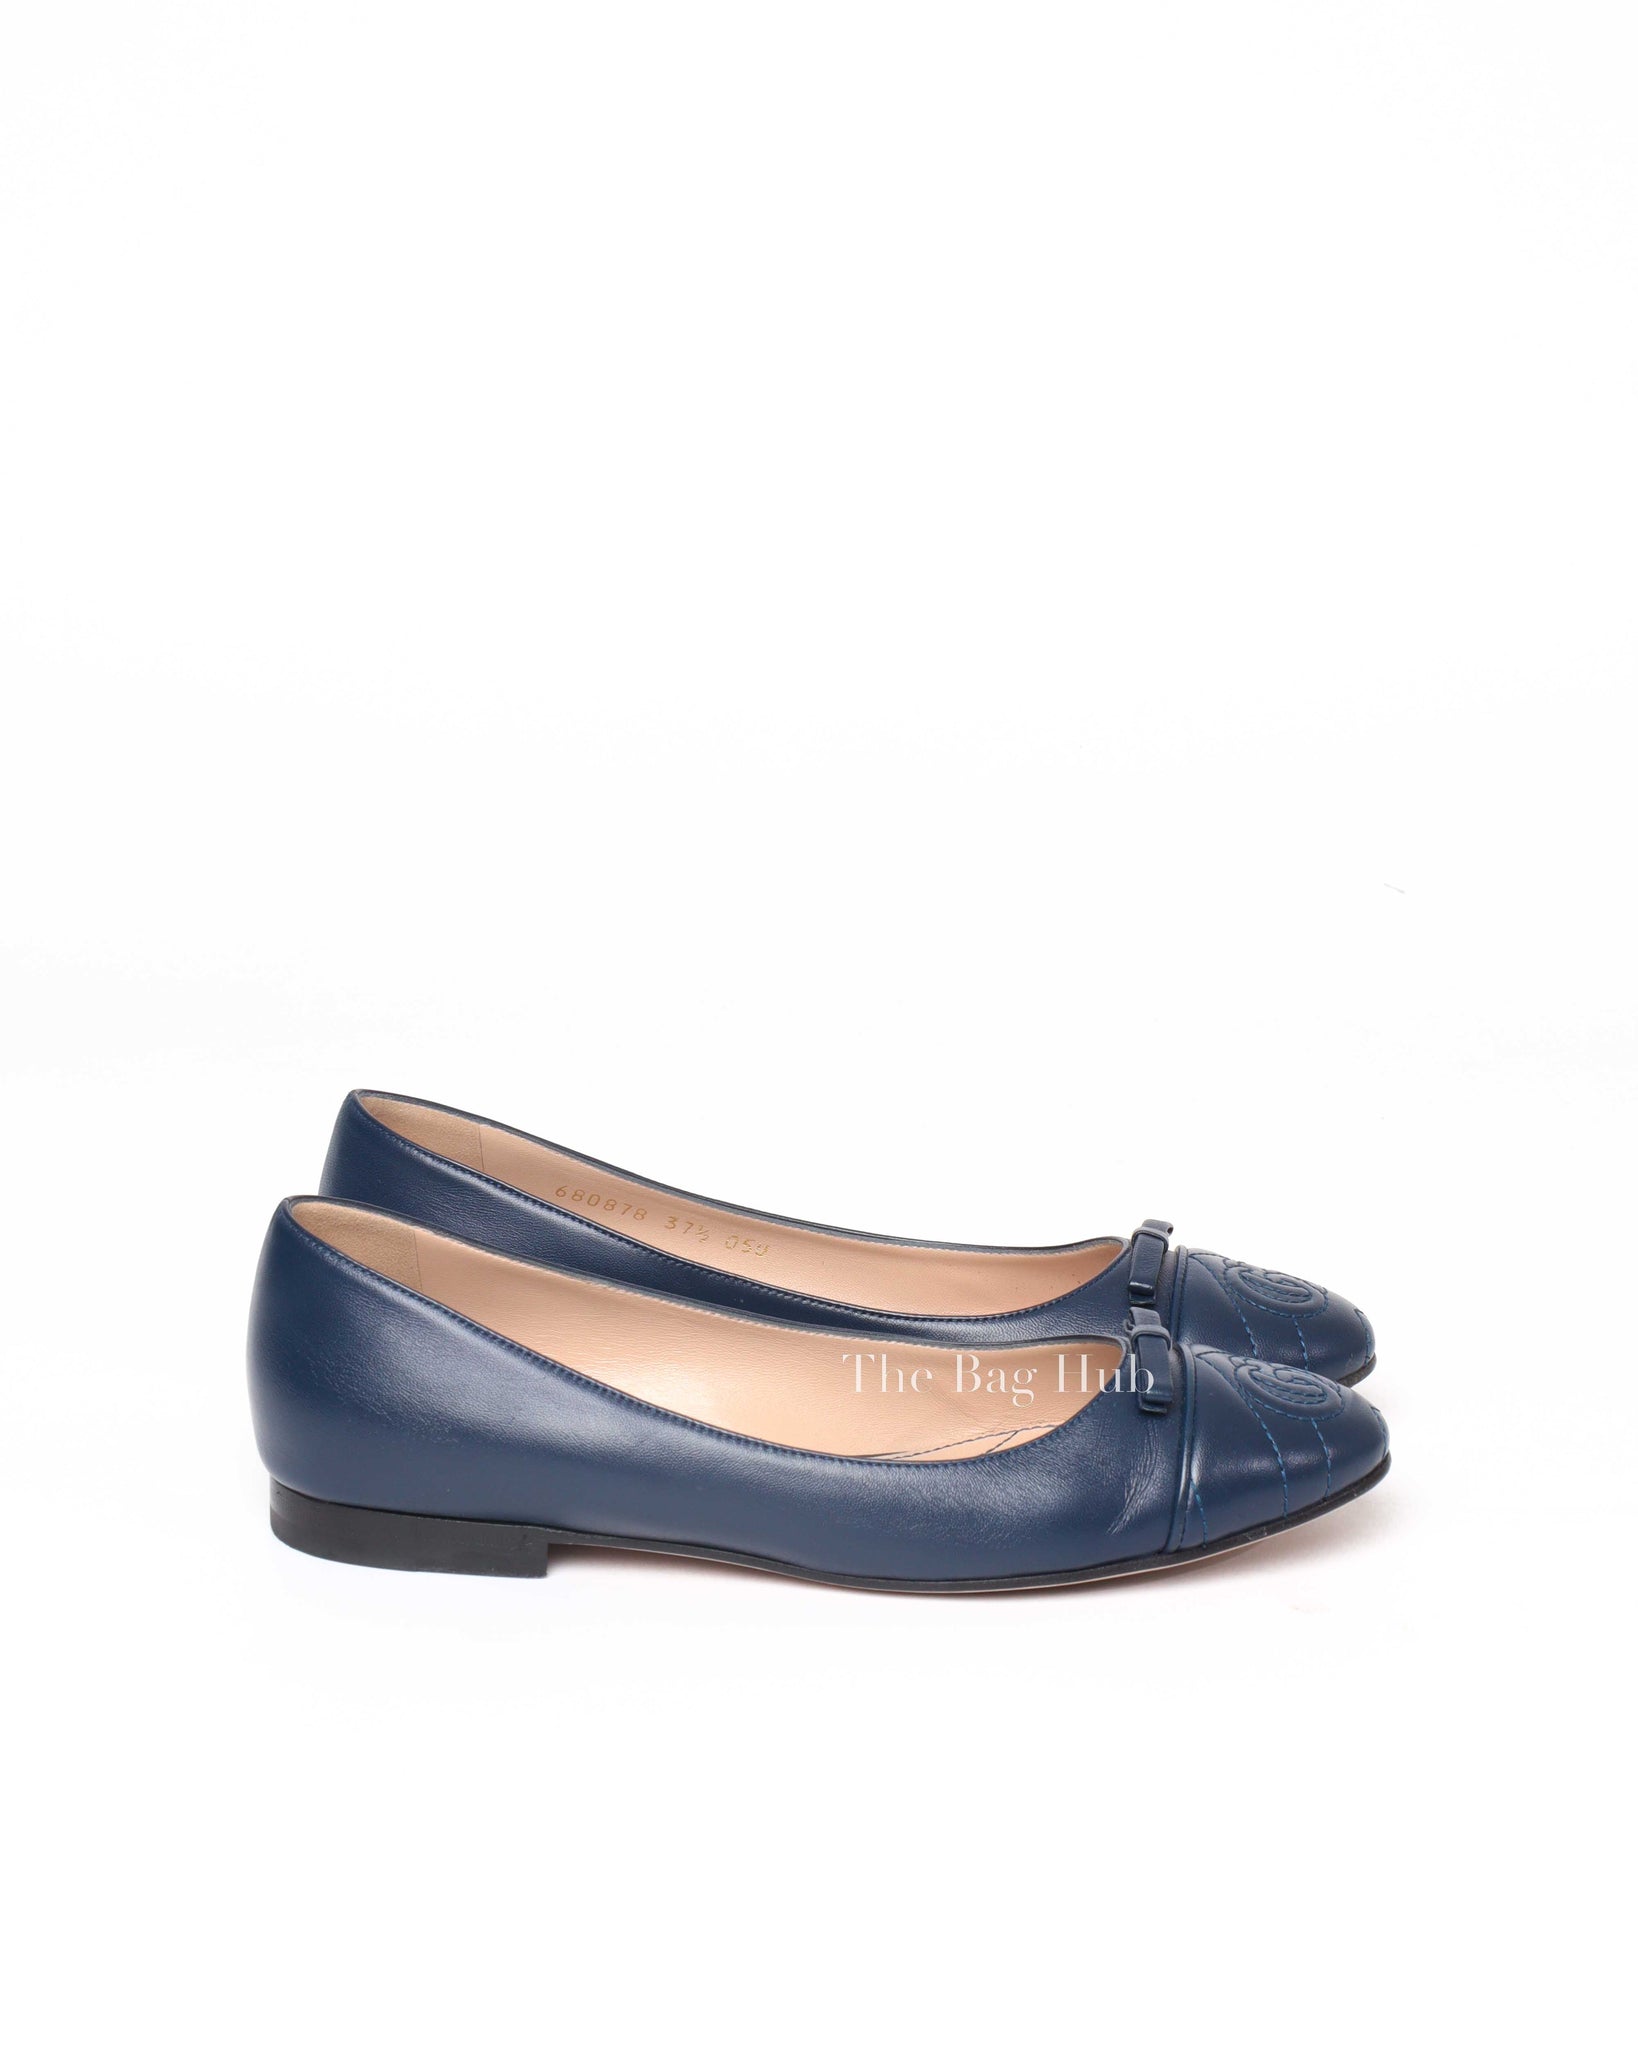 Gucci Blue Agata Nappa Leather Charlotte Ballet Flats Size 37.5-5